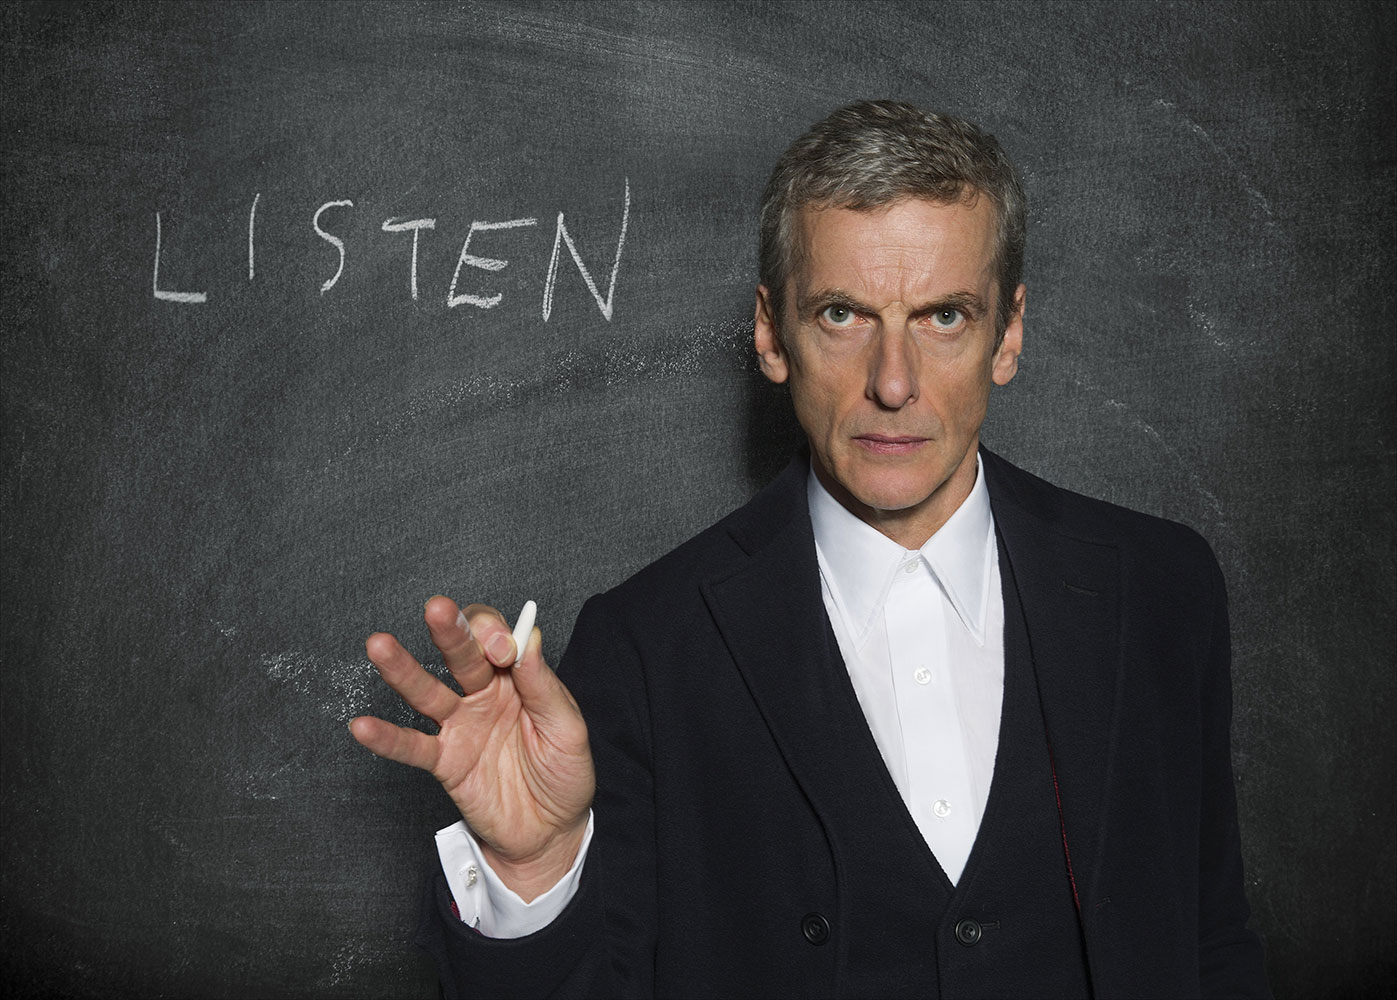 doctor who - Doctor Who : un teaser pour la saison 9 ! Doctor Who Listen pic2